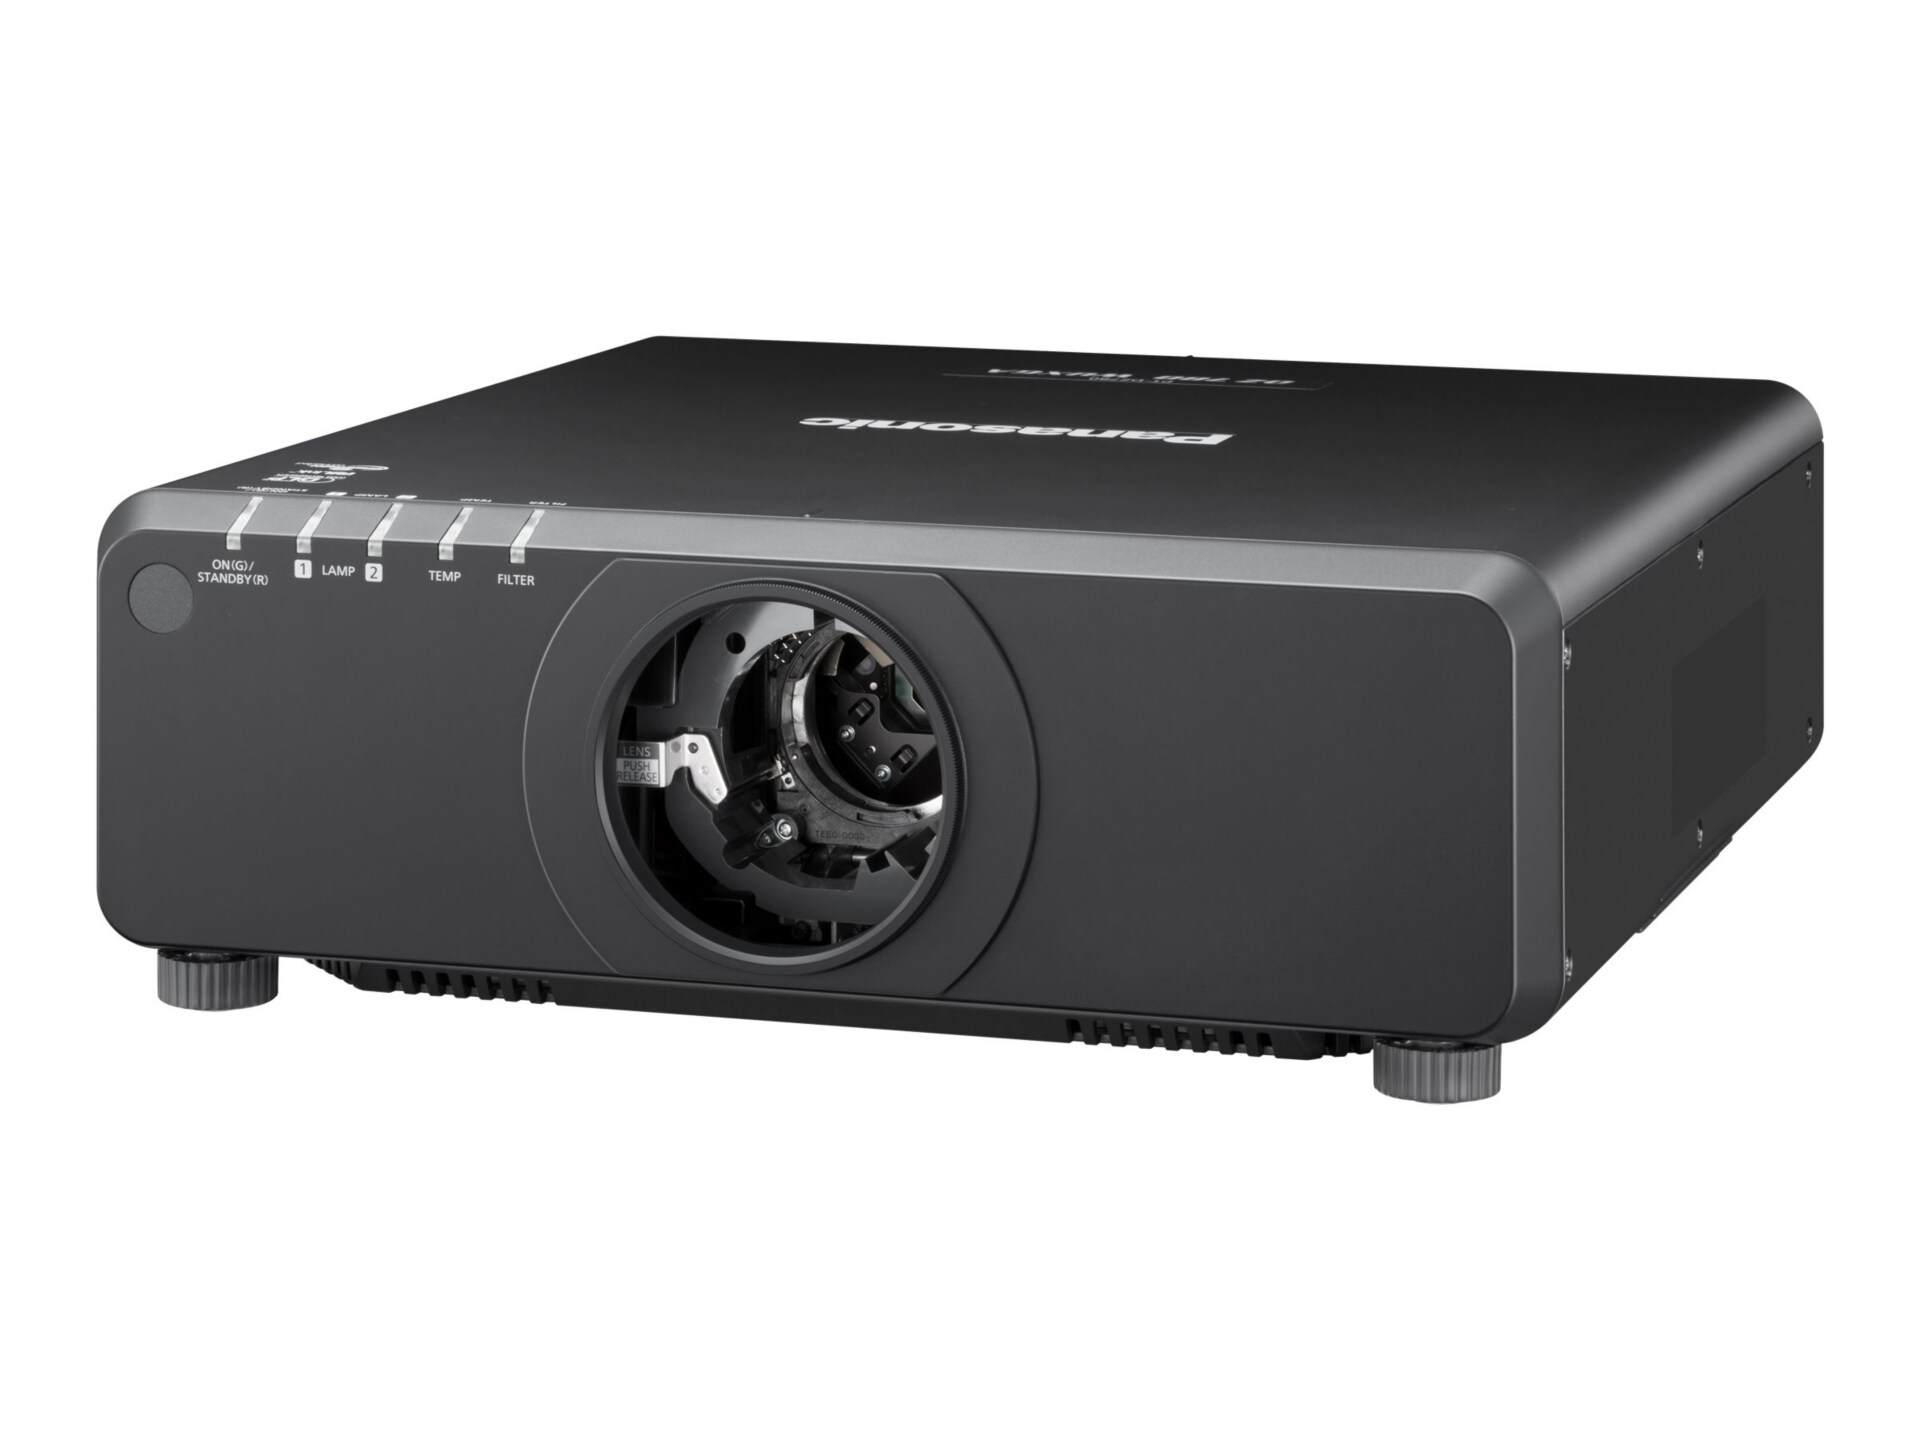 Panasonic PT-DW750LBU - DLP projector - LAN